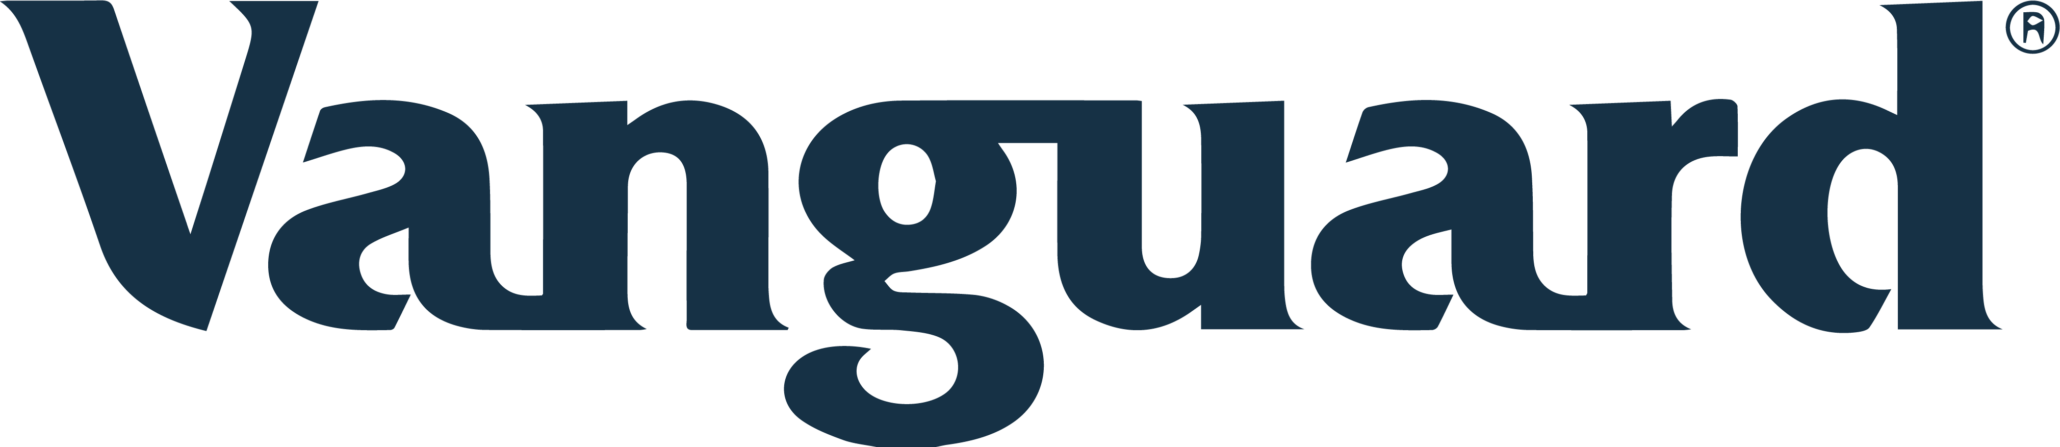 Client logo - Vanguard